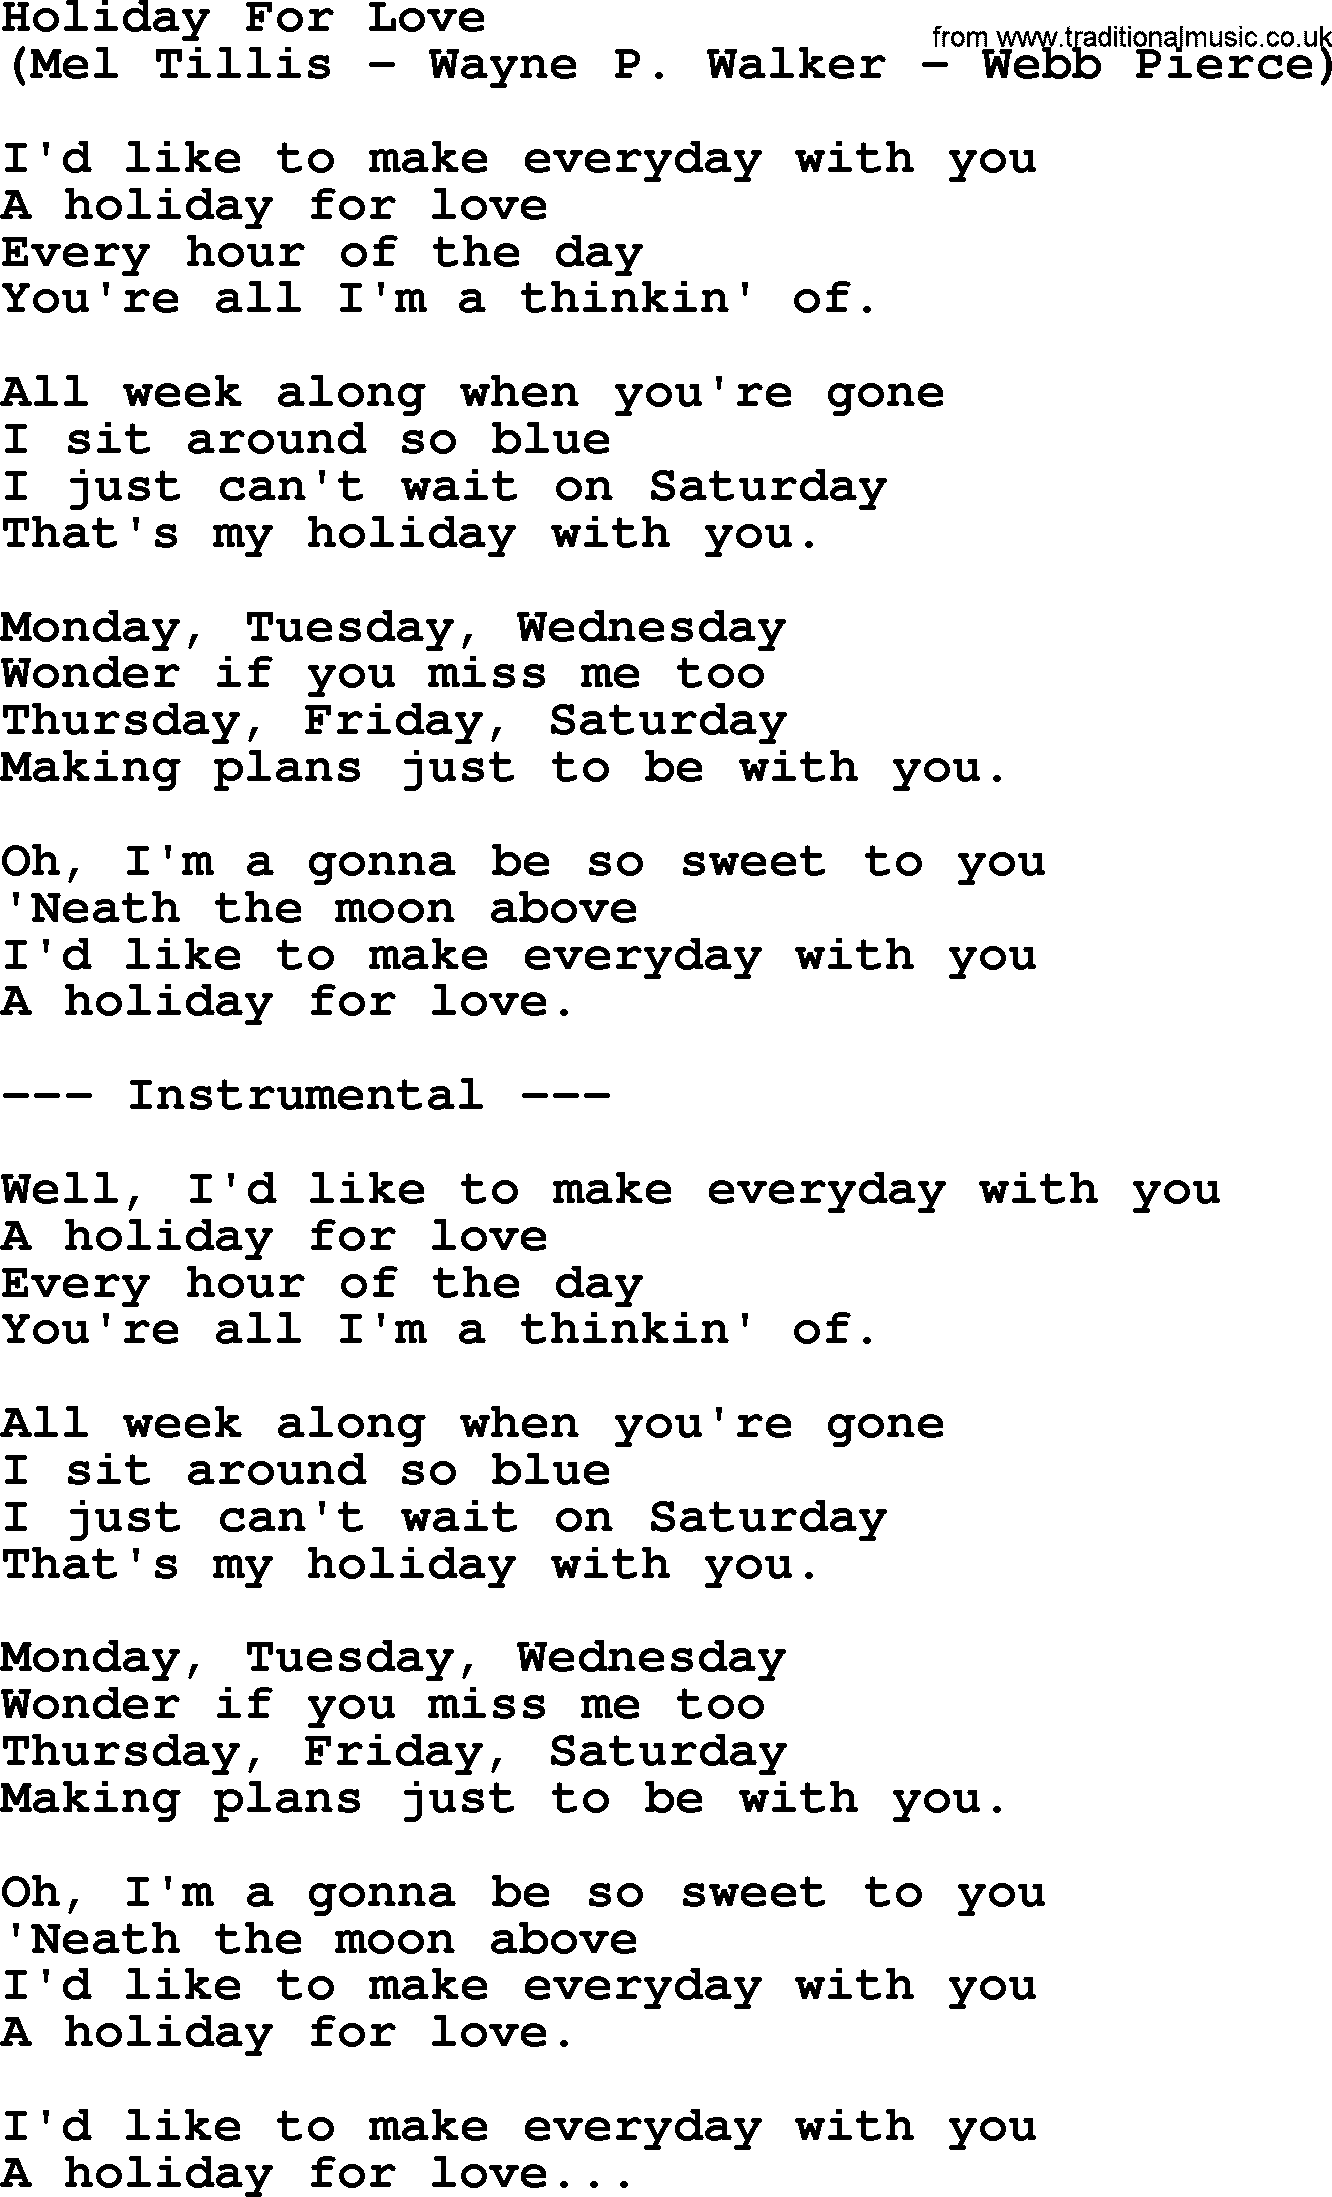 George Jones song: Holiday For Love, lyrics